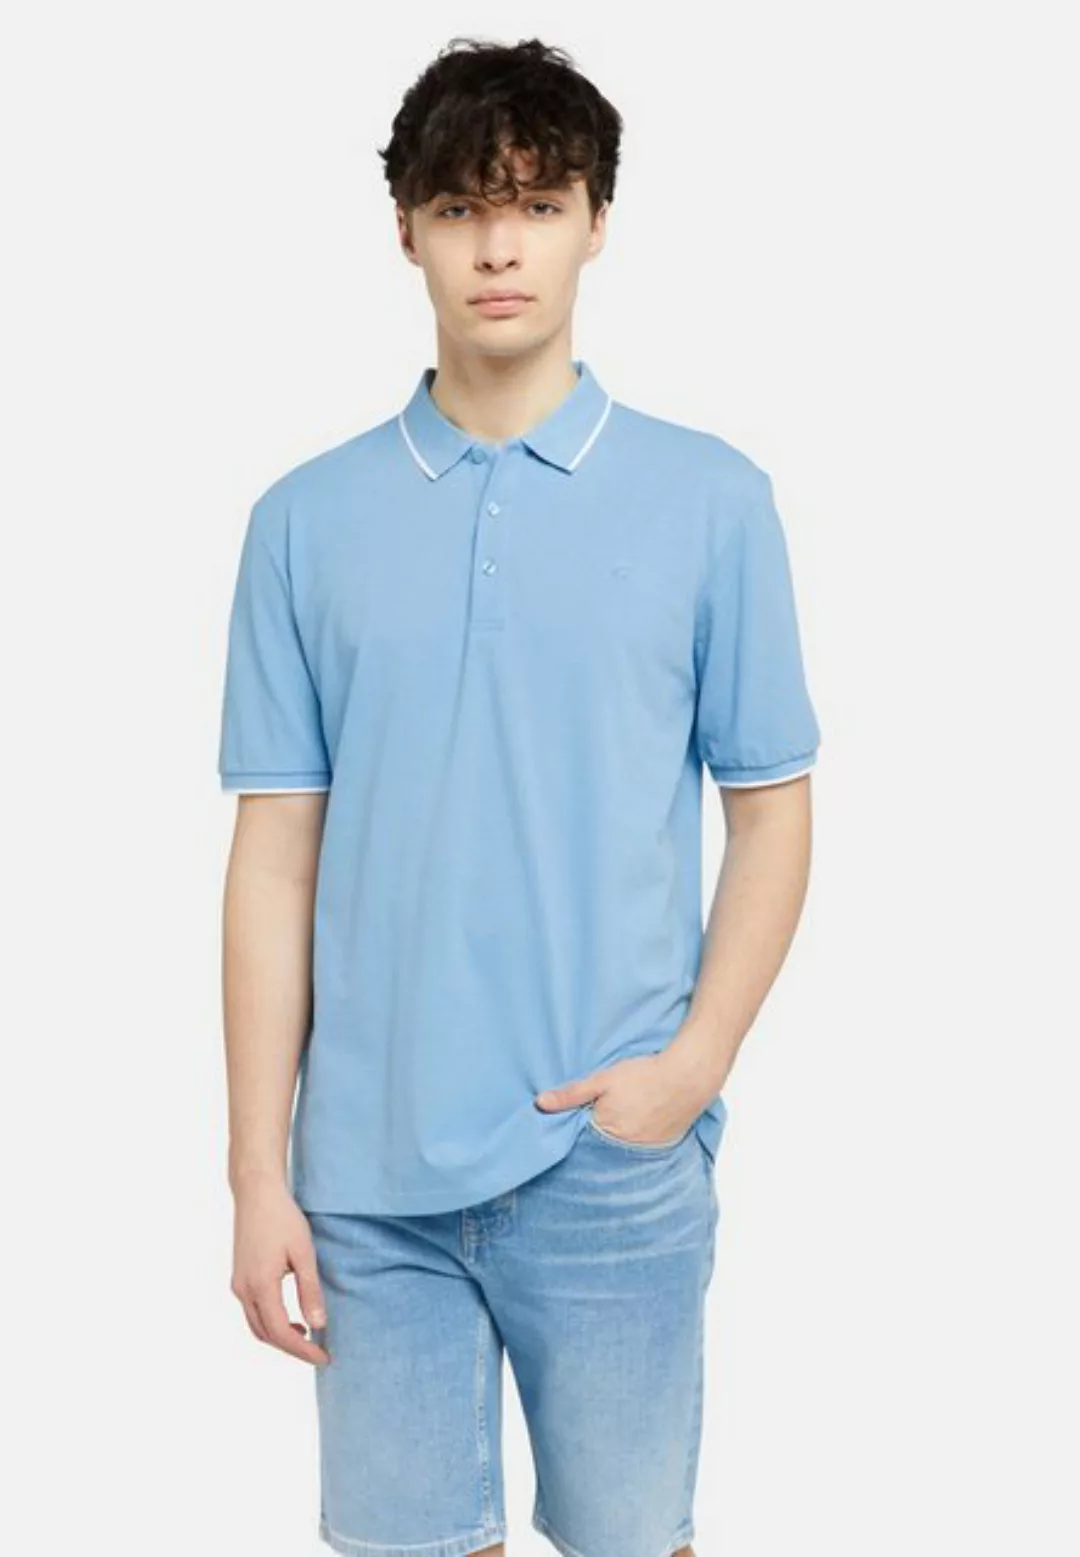 Lawrence Grey Poloshirt Polohemd Kurzarm günstig online kaufen